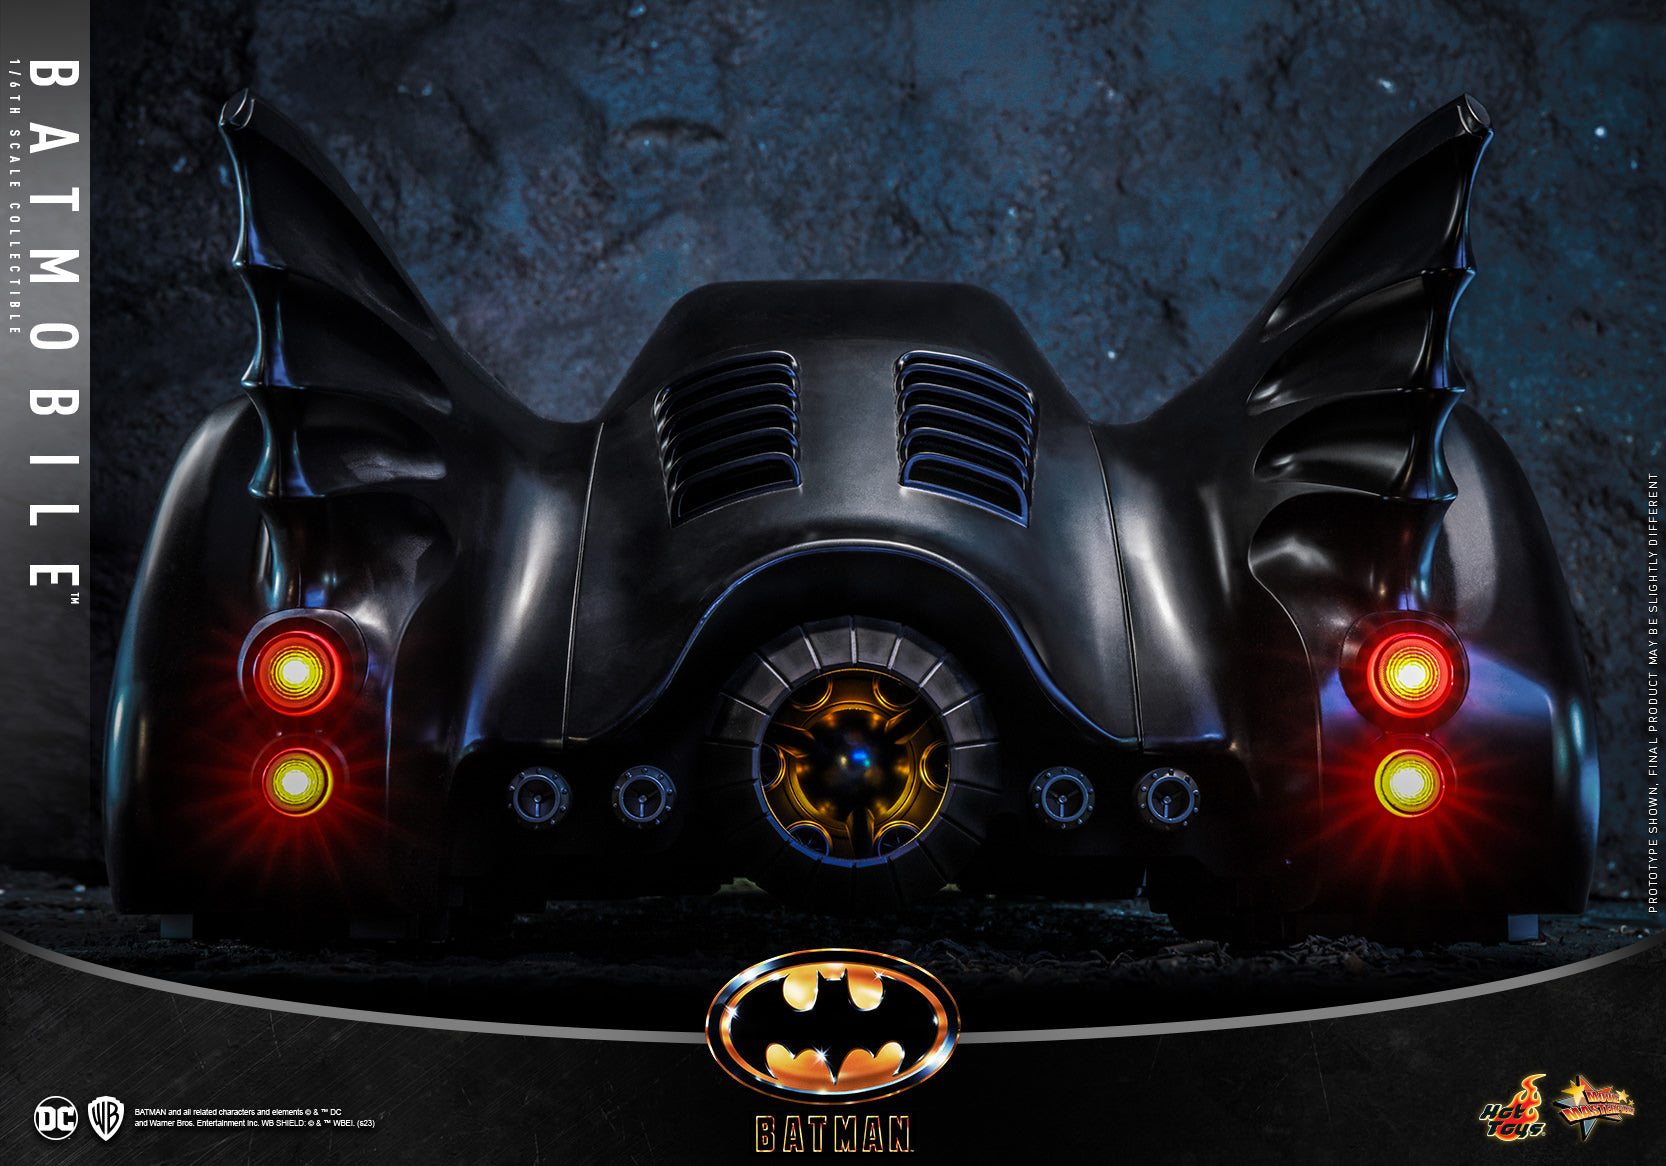 Batmobile: Batman 1989: MMS694 Hot Toys